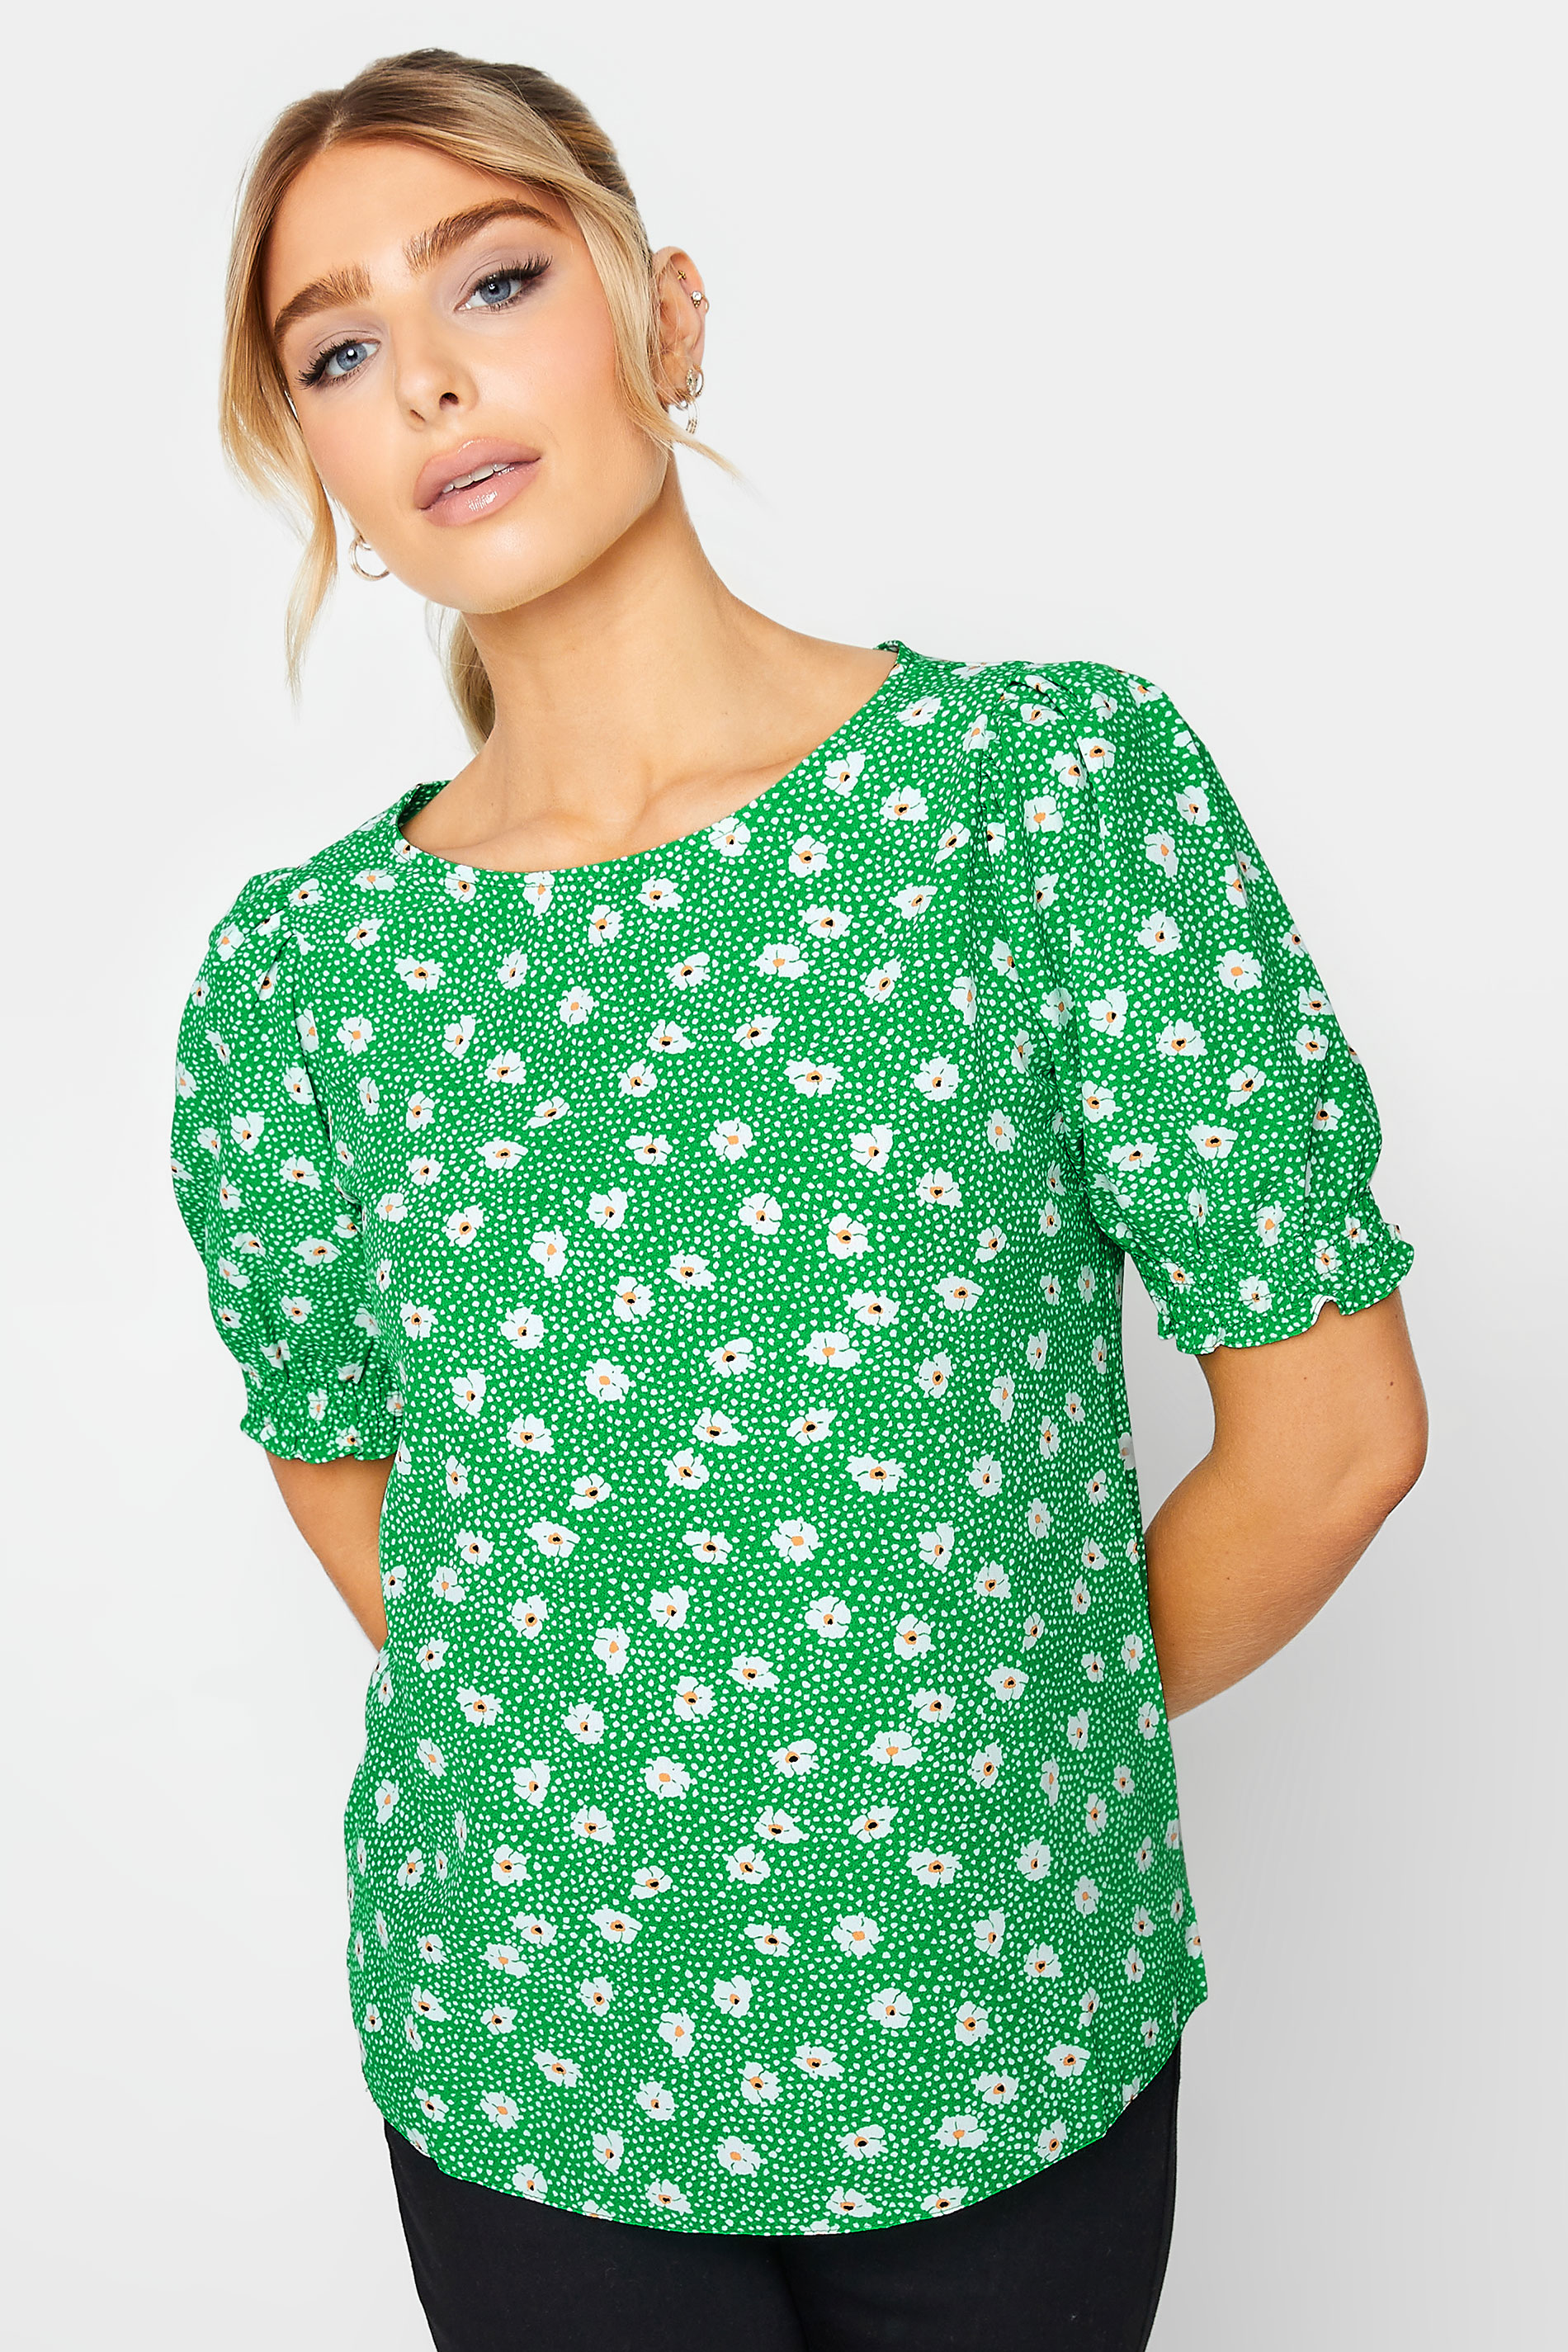 M&Co Green Daisy Print Blouse | M&Co 1